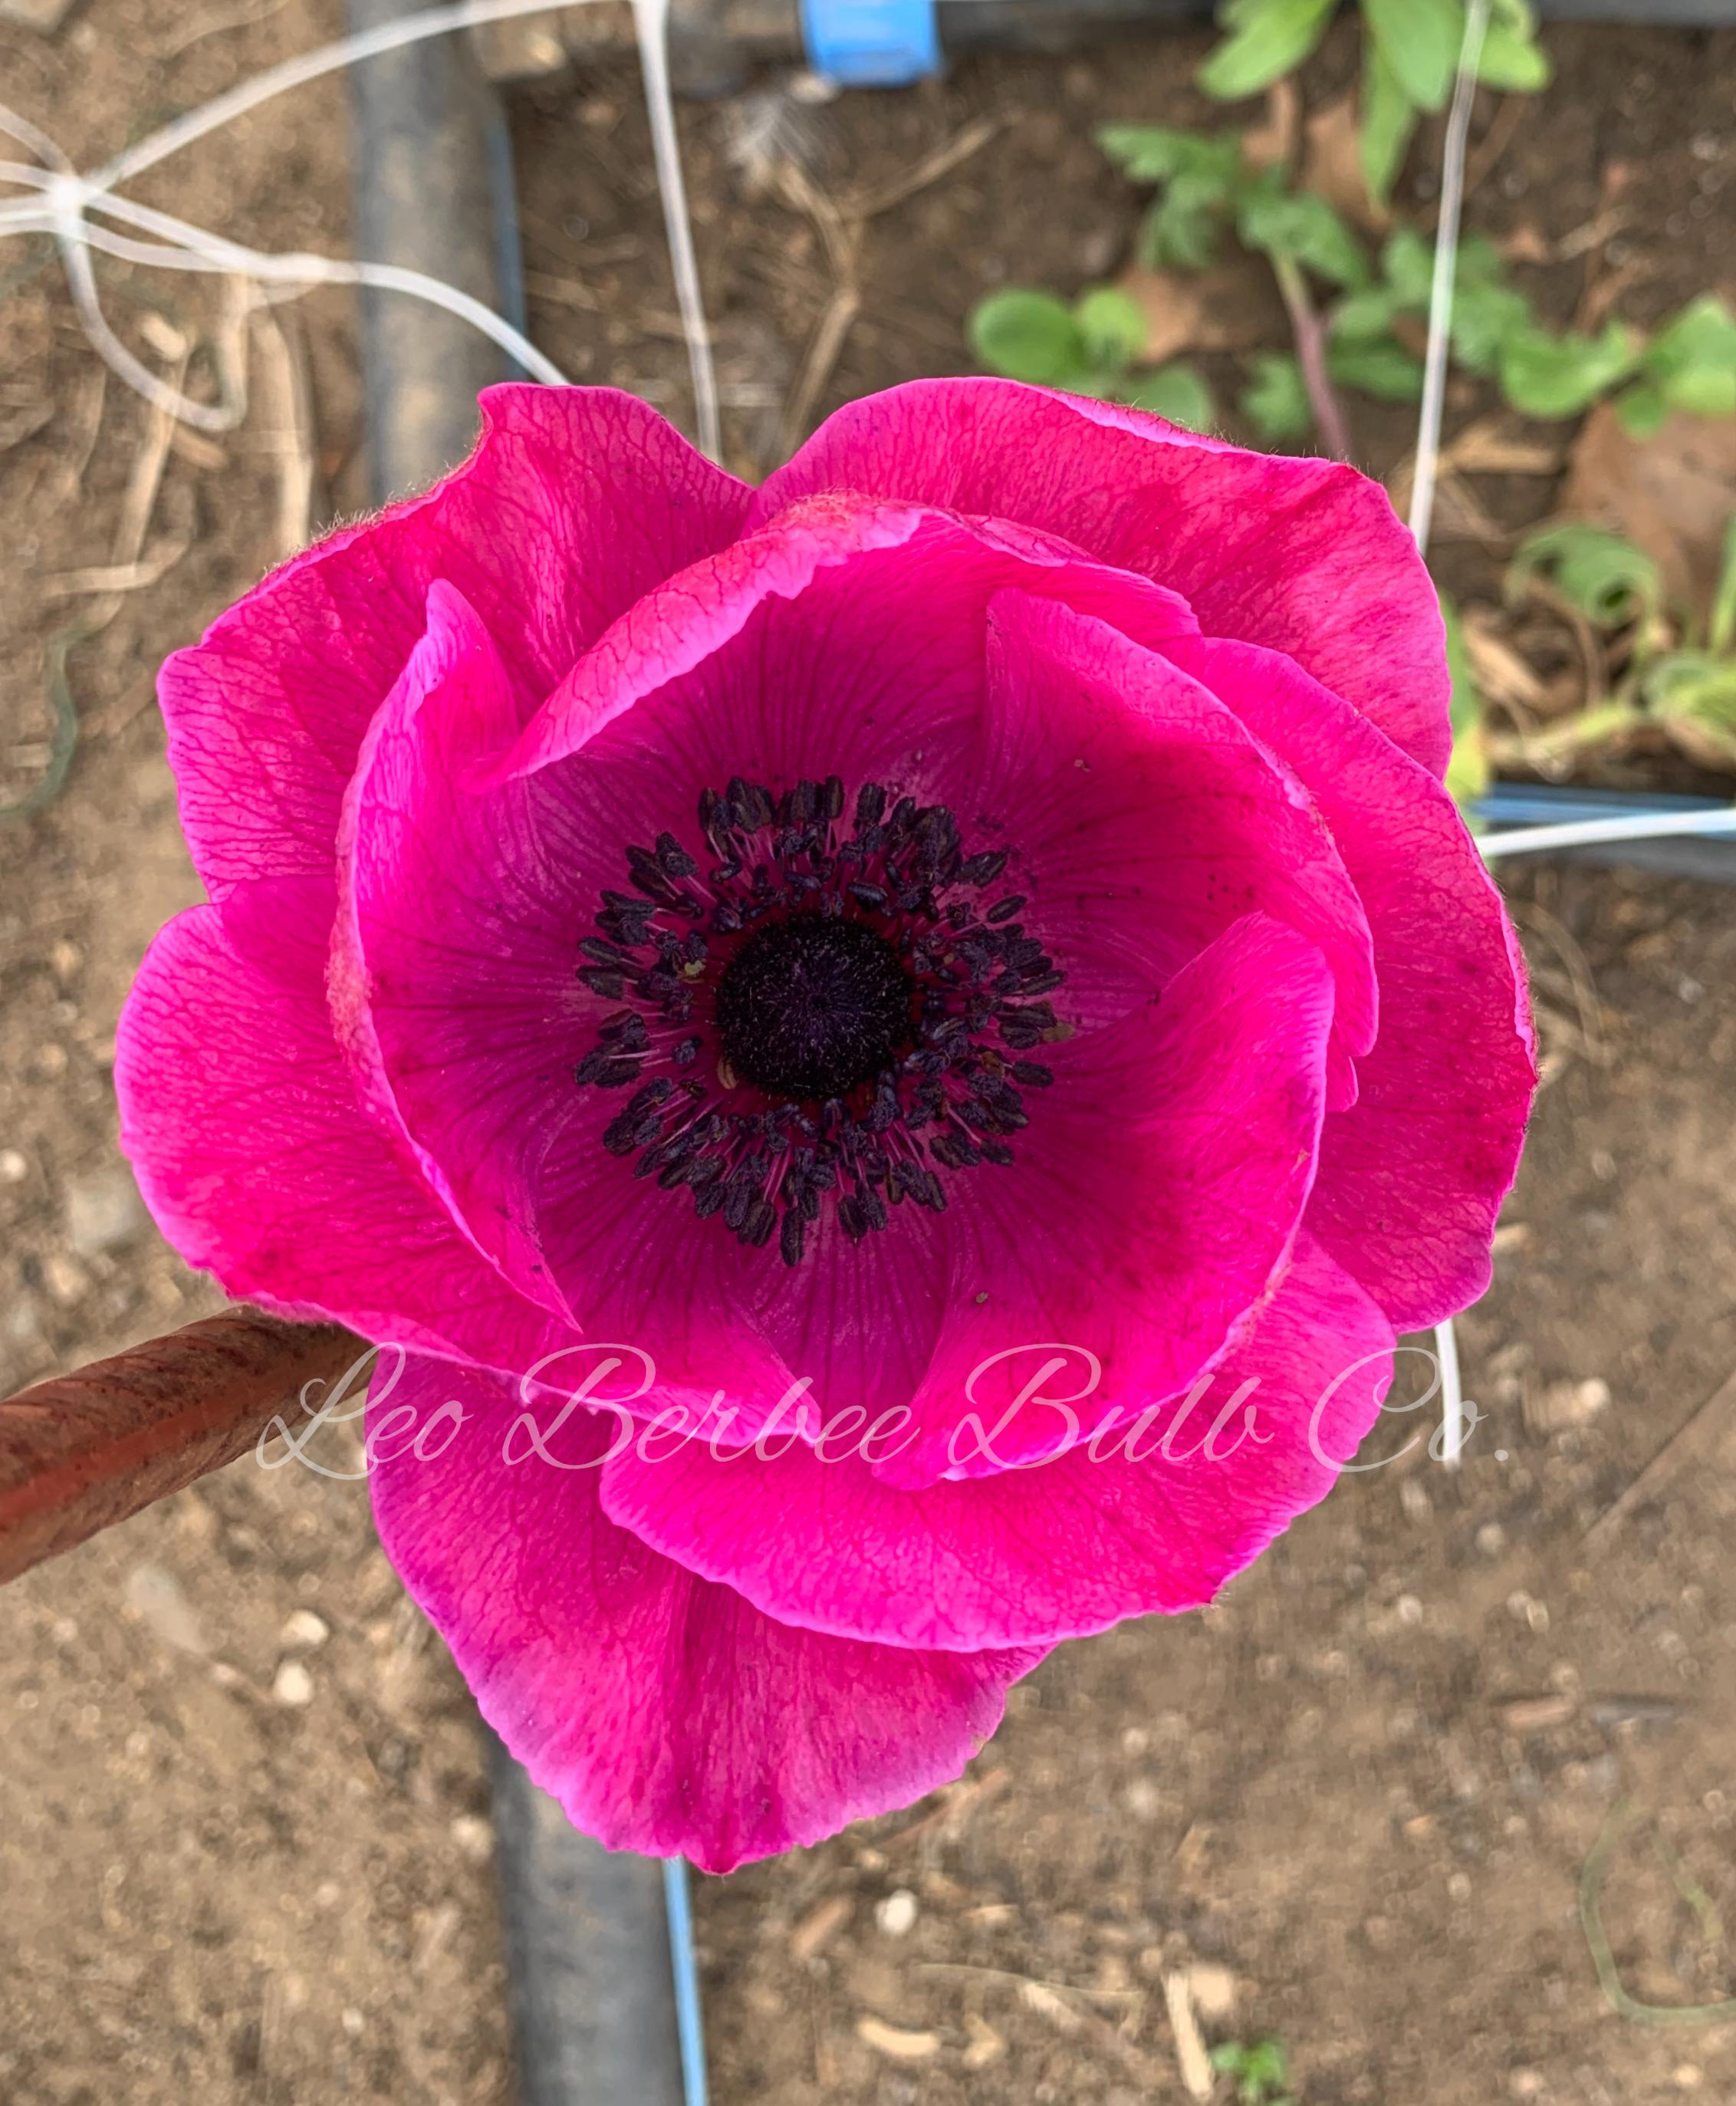 Anemone 'Jerusalem Pink' - from Leo Berbee Bulb Company